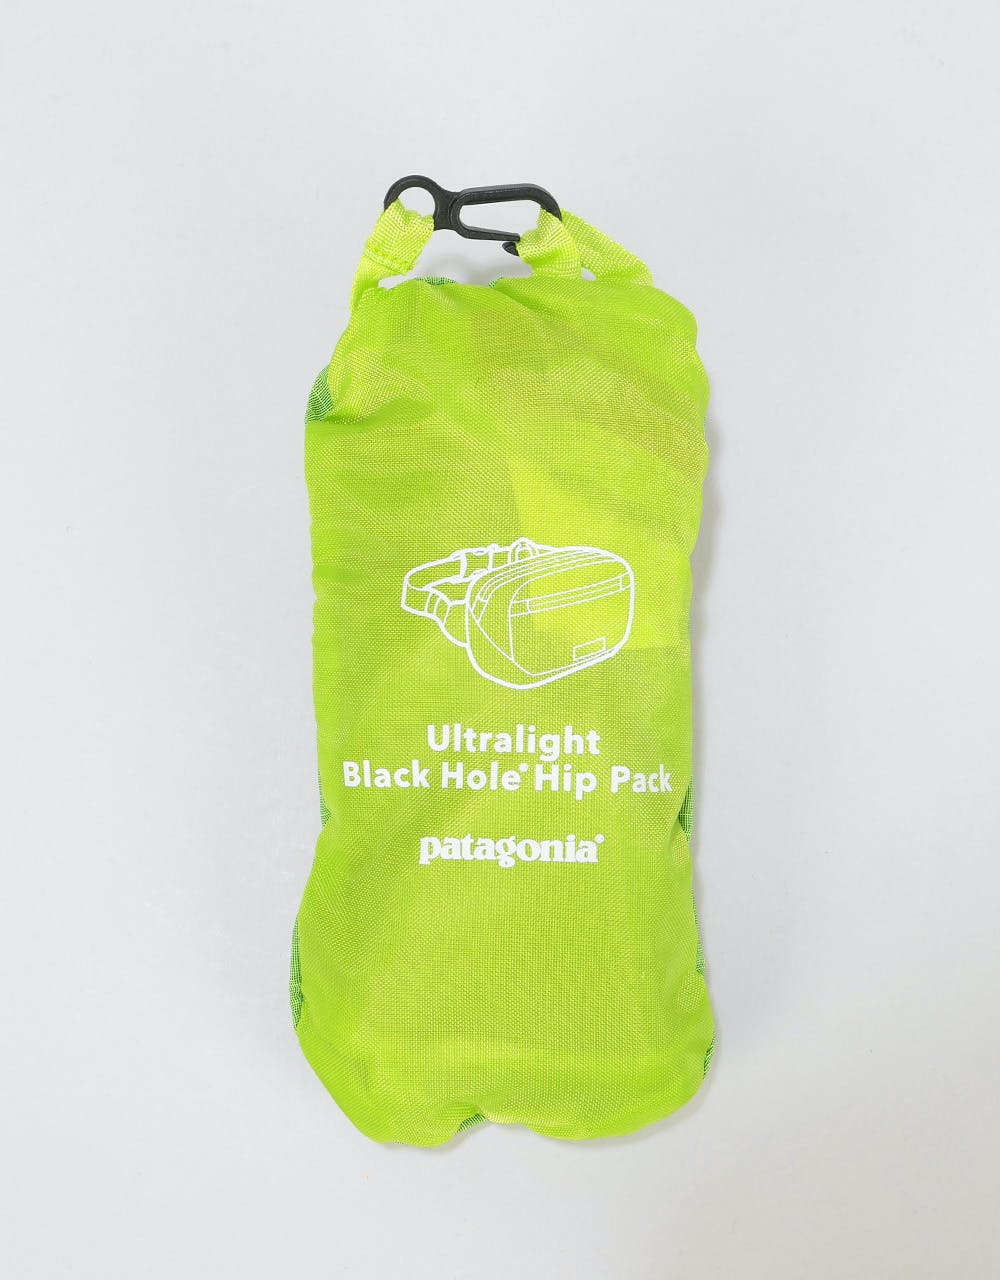 Patagonia Ultralight Black Hole Mini Cross Body Bag - Patchwork/Pepper